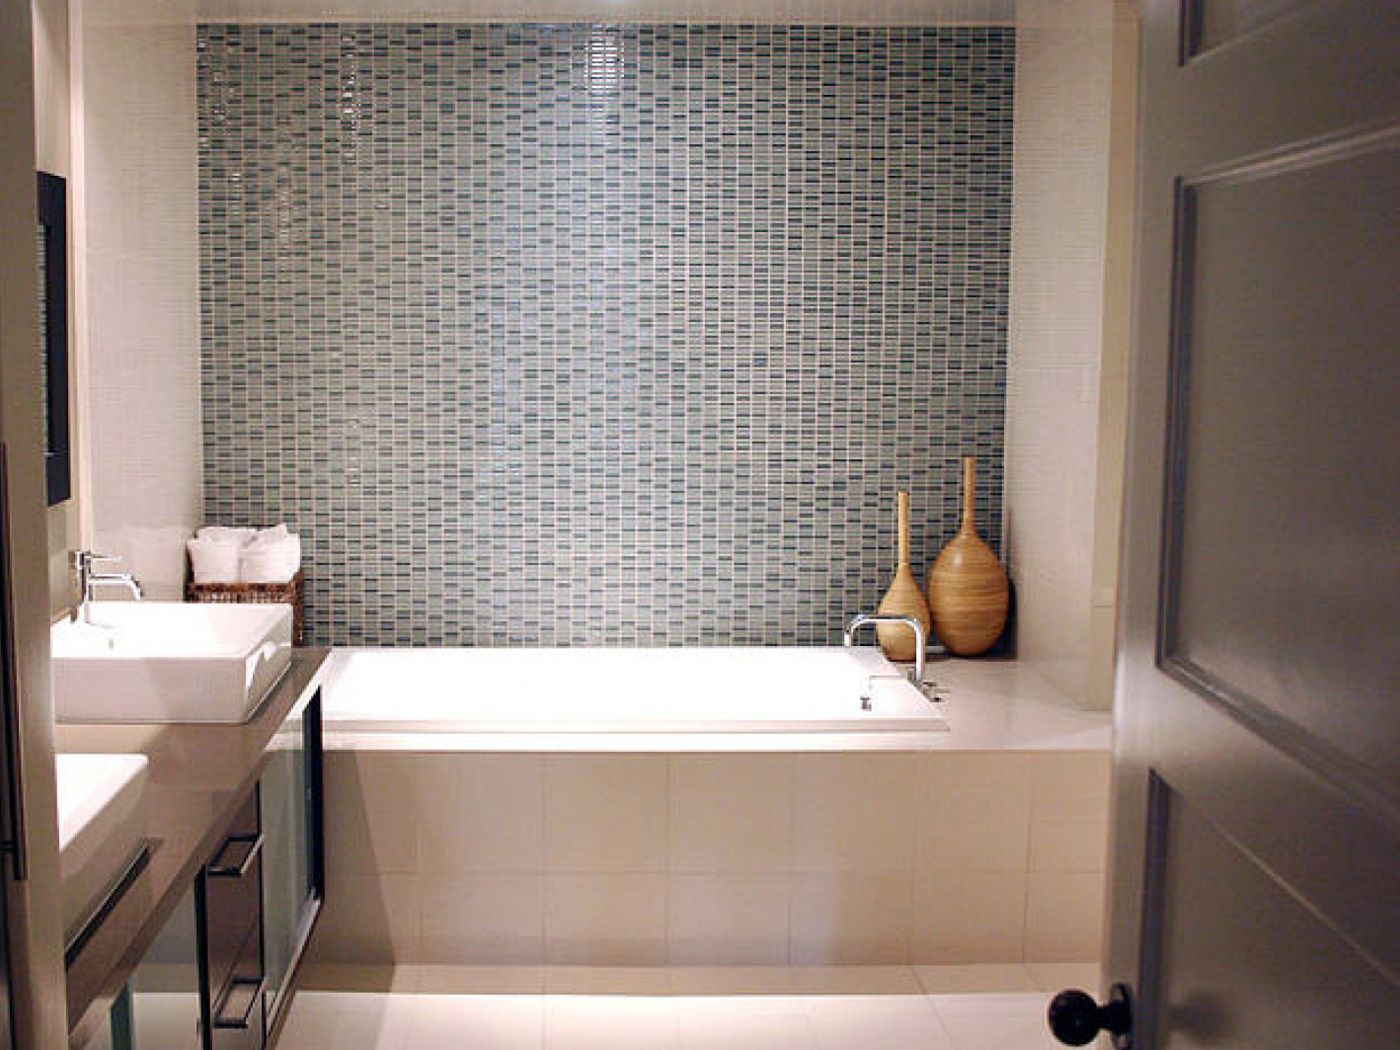 Design Bathroom With Modern Design Bathroom Tile Ideas With Mosaic Tile Bathroom Model Also White Bathtub Design Ideas And Minimalist Sink Bathroom Small Faucets Design Ideas Bathroom The Reasons Why Choosing Bathroom Tile Ideas